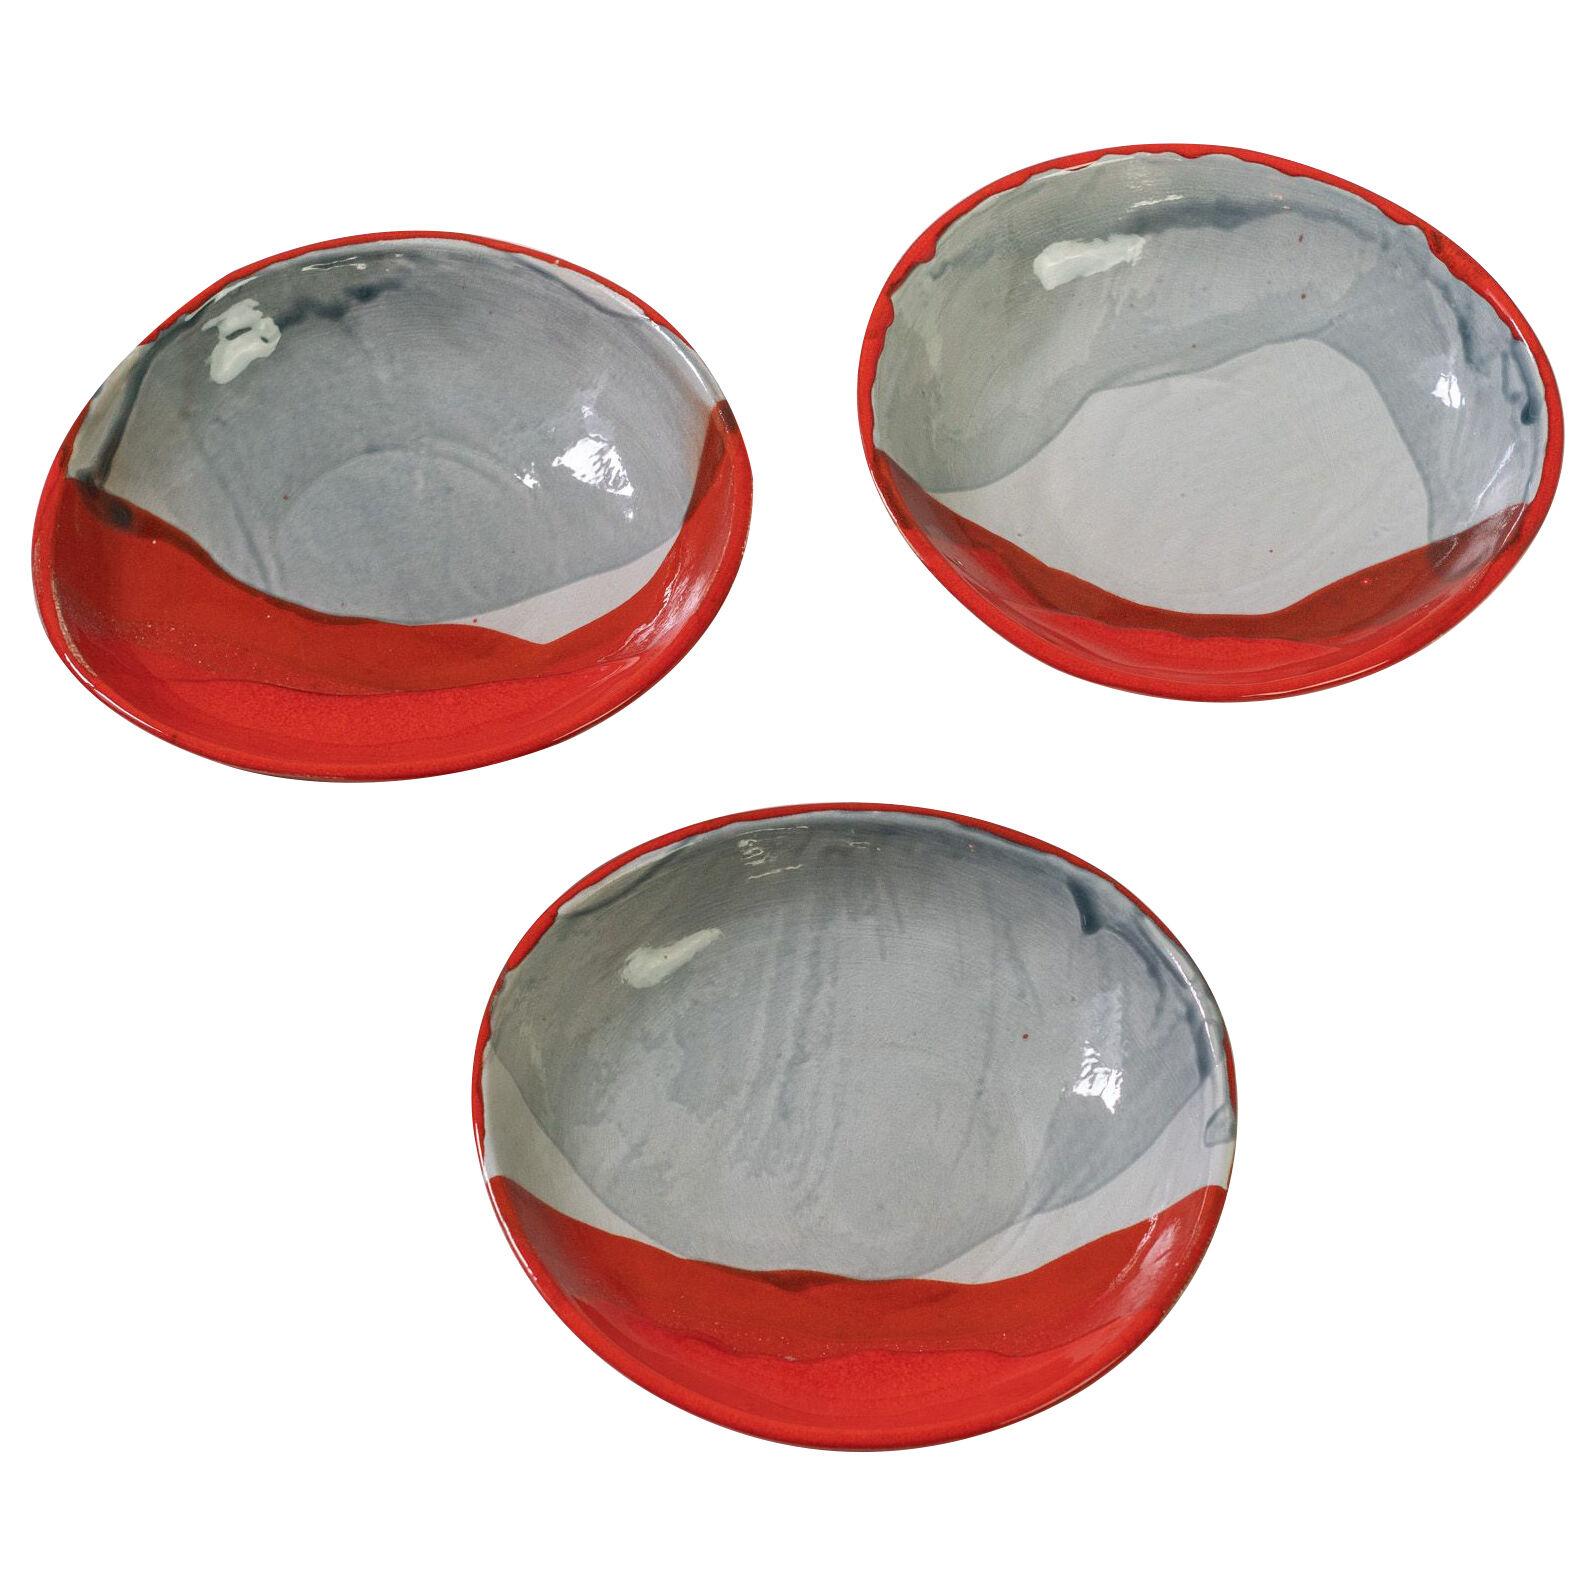 Set of 3 Ceramics "Culs Rouges" Hommage à Louboutin